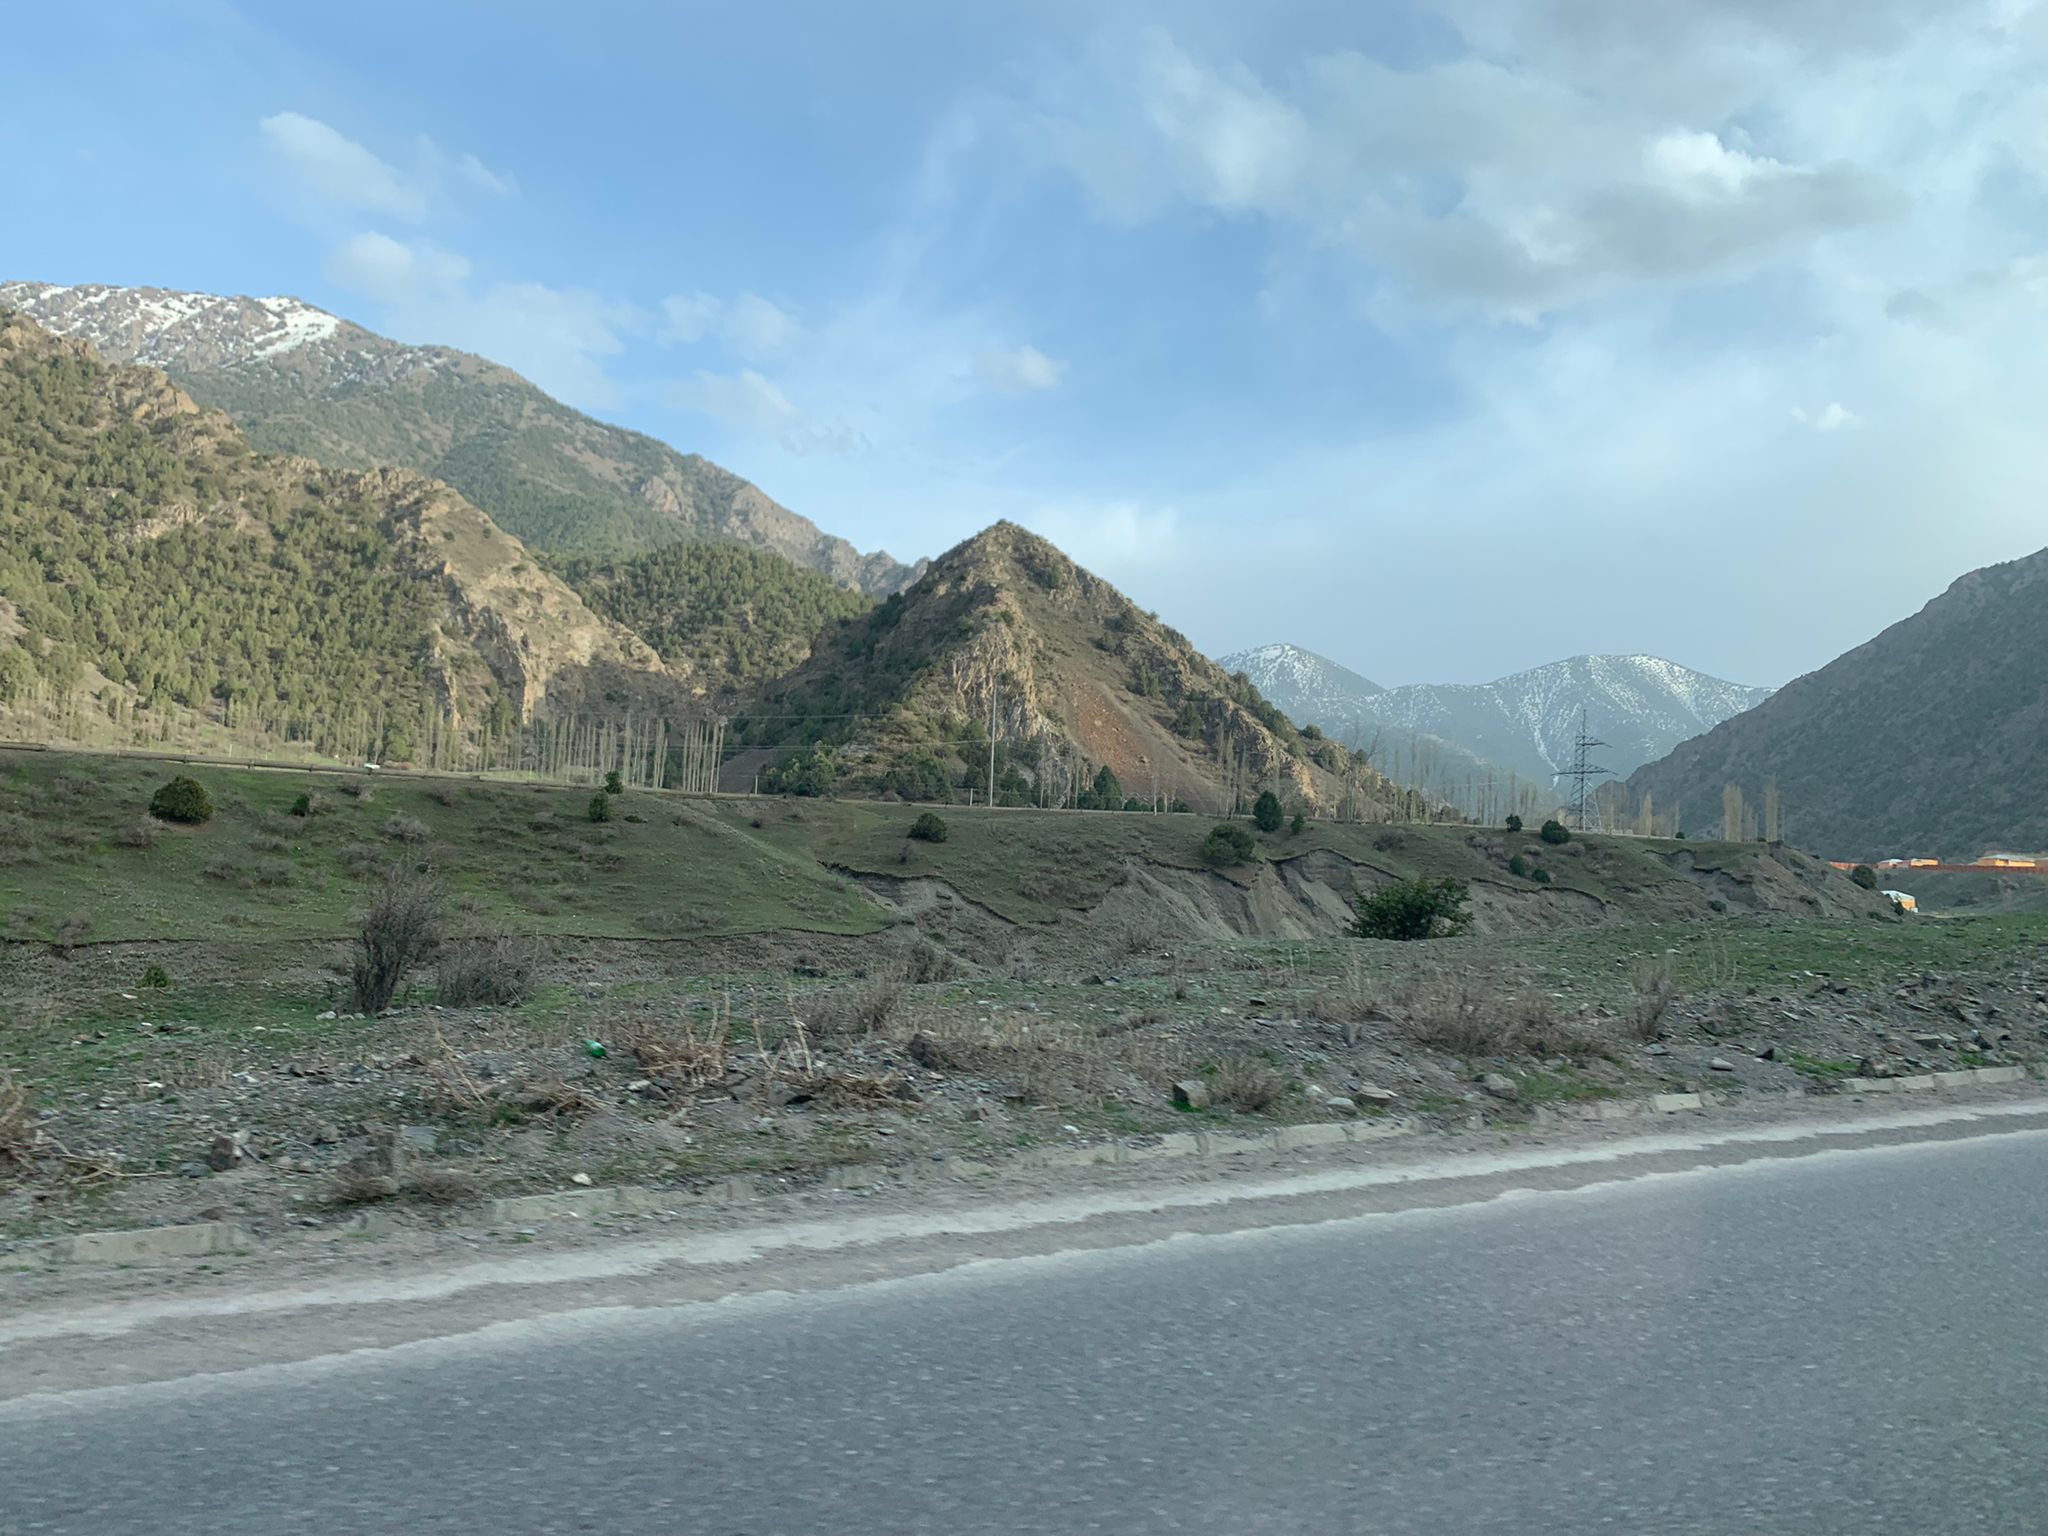 Qairakkum, Tajikistan